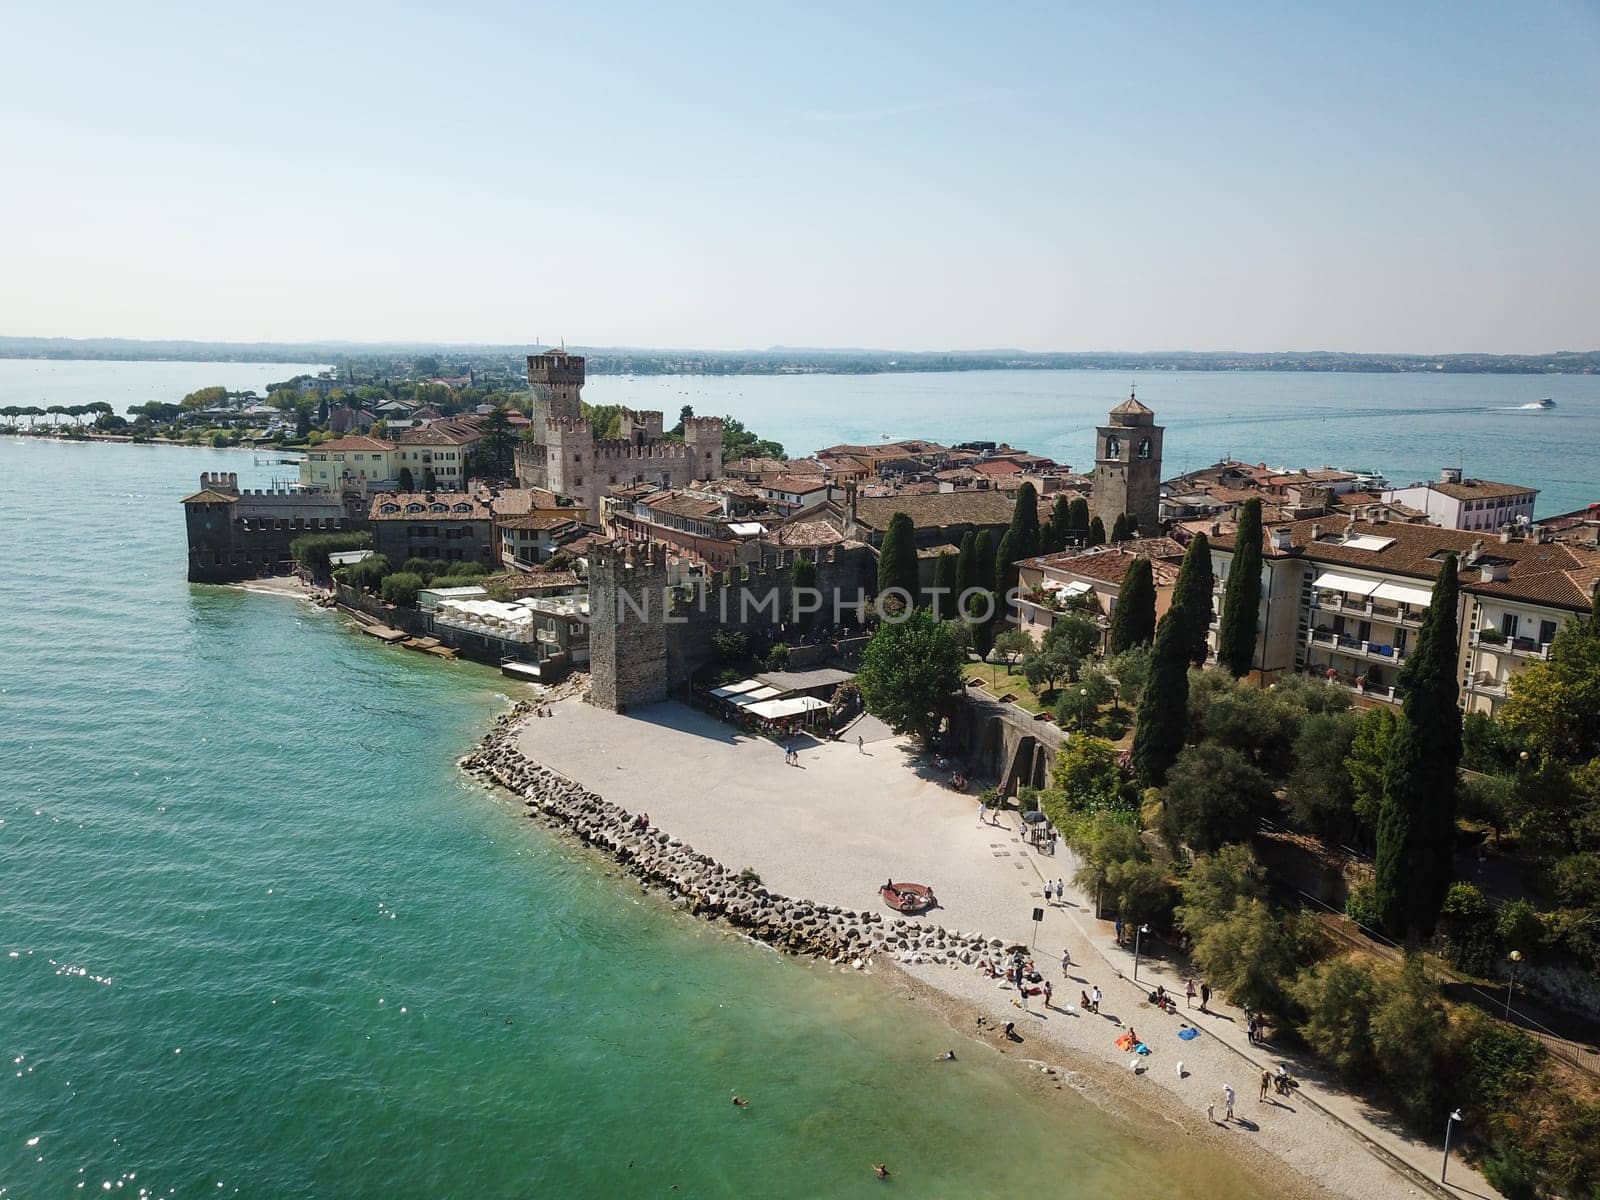 Scallgero Castle Aerial shots Sirmione Lake Garda Italy. High quality photo